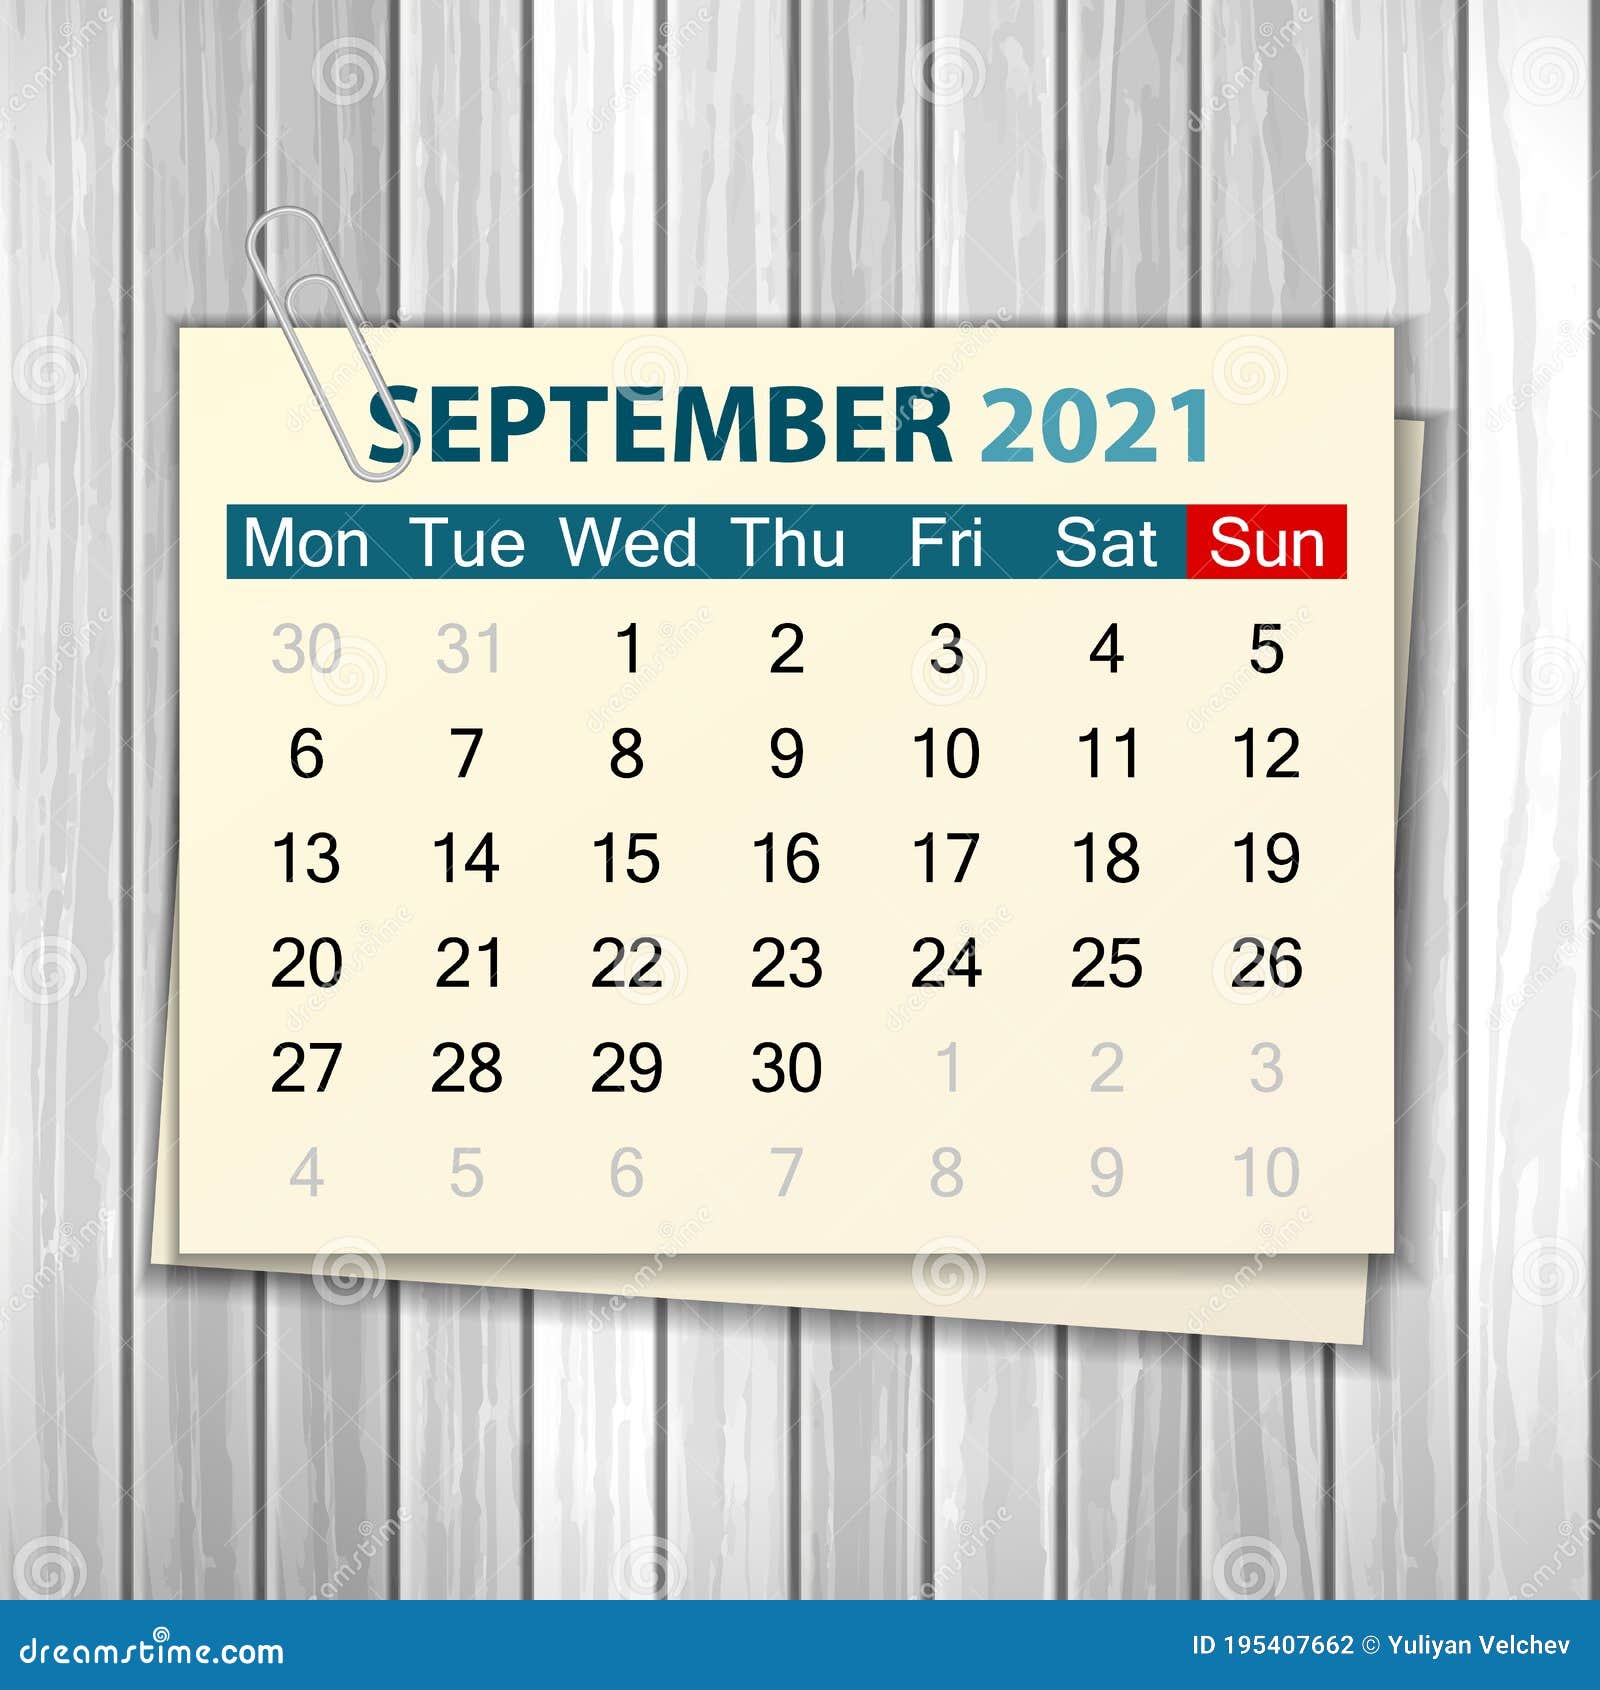 Calendar September Vector Illustration